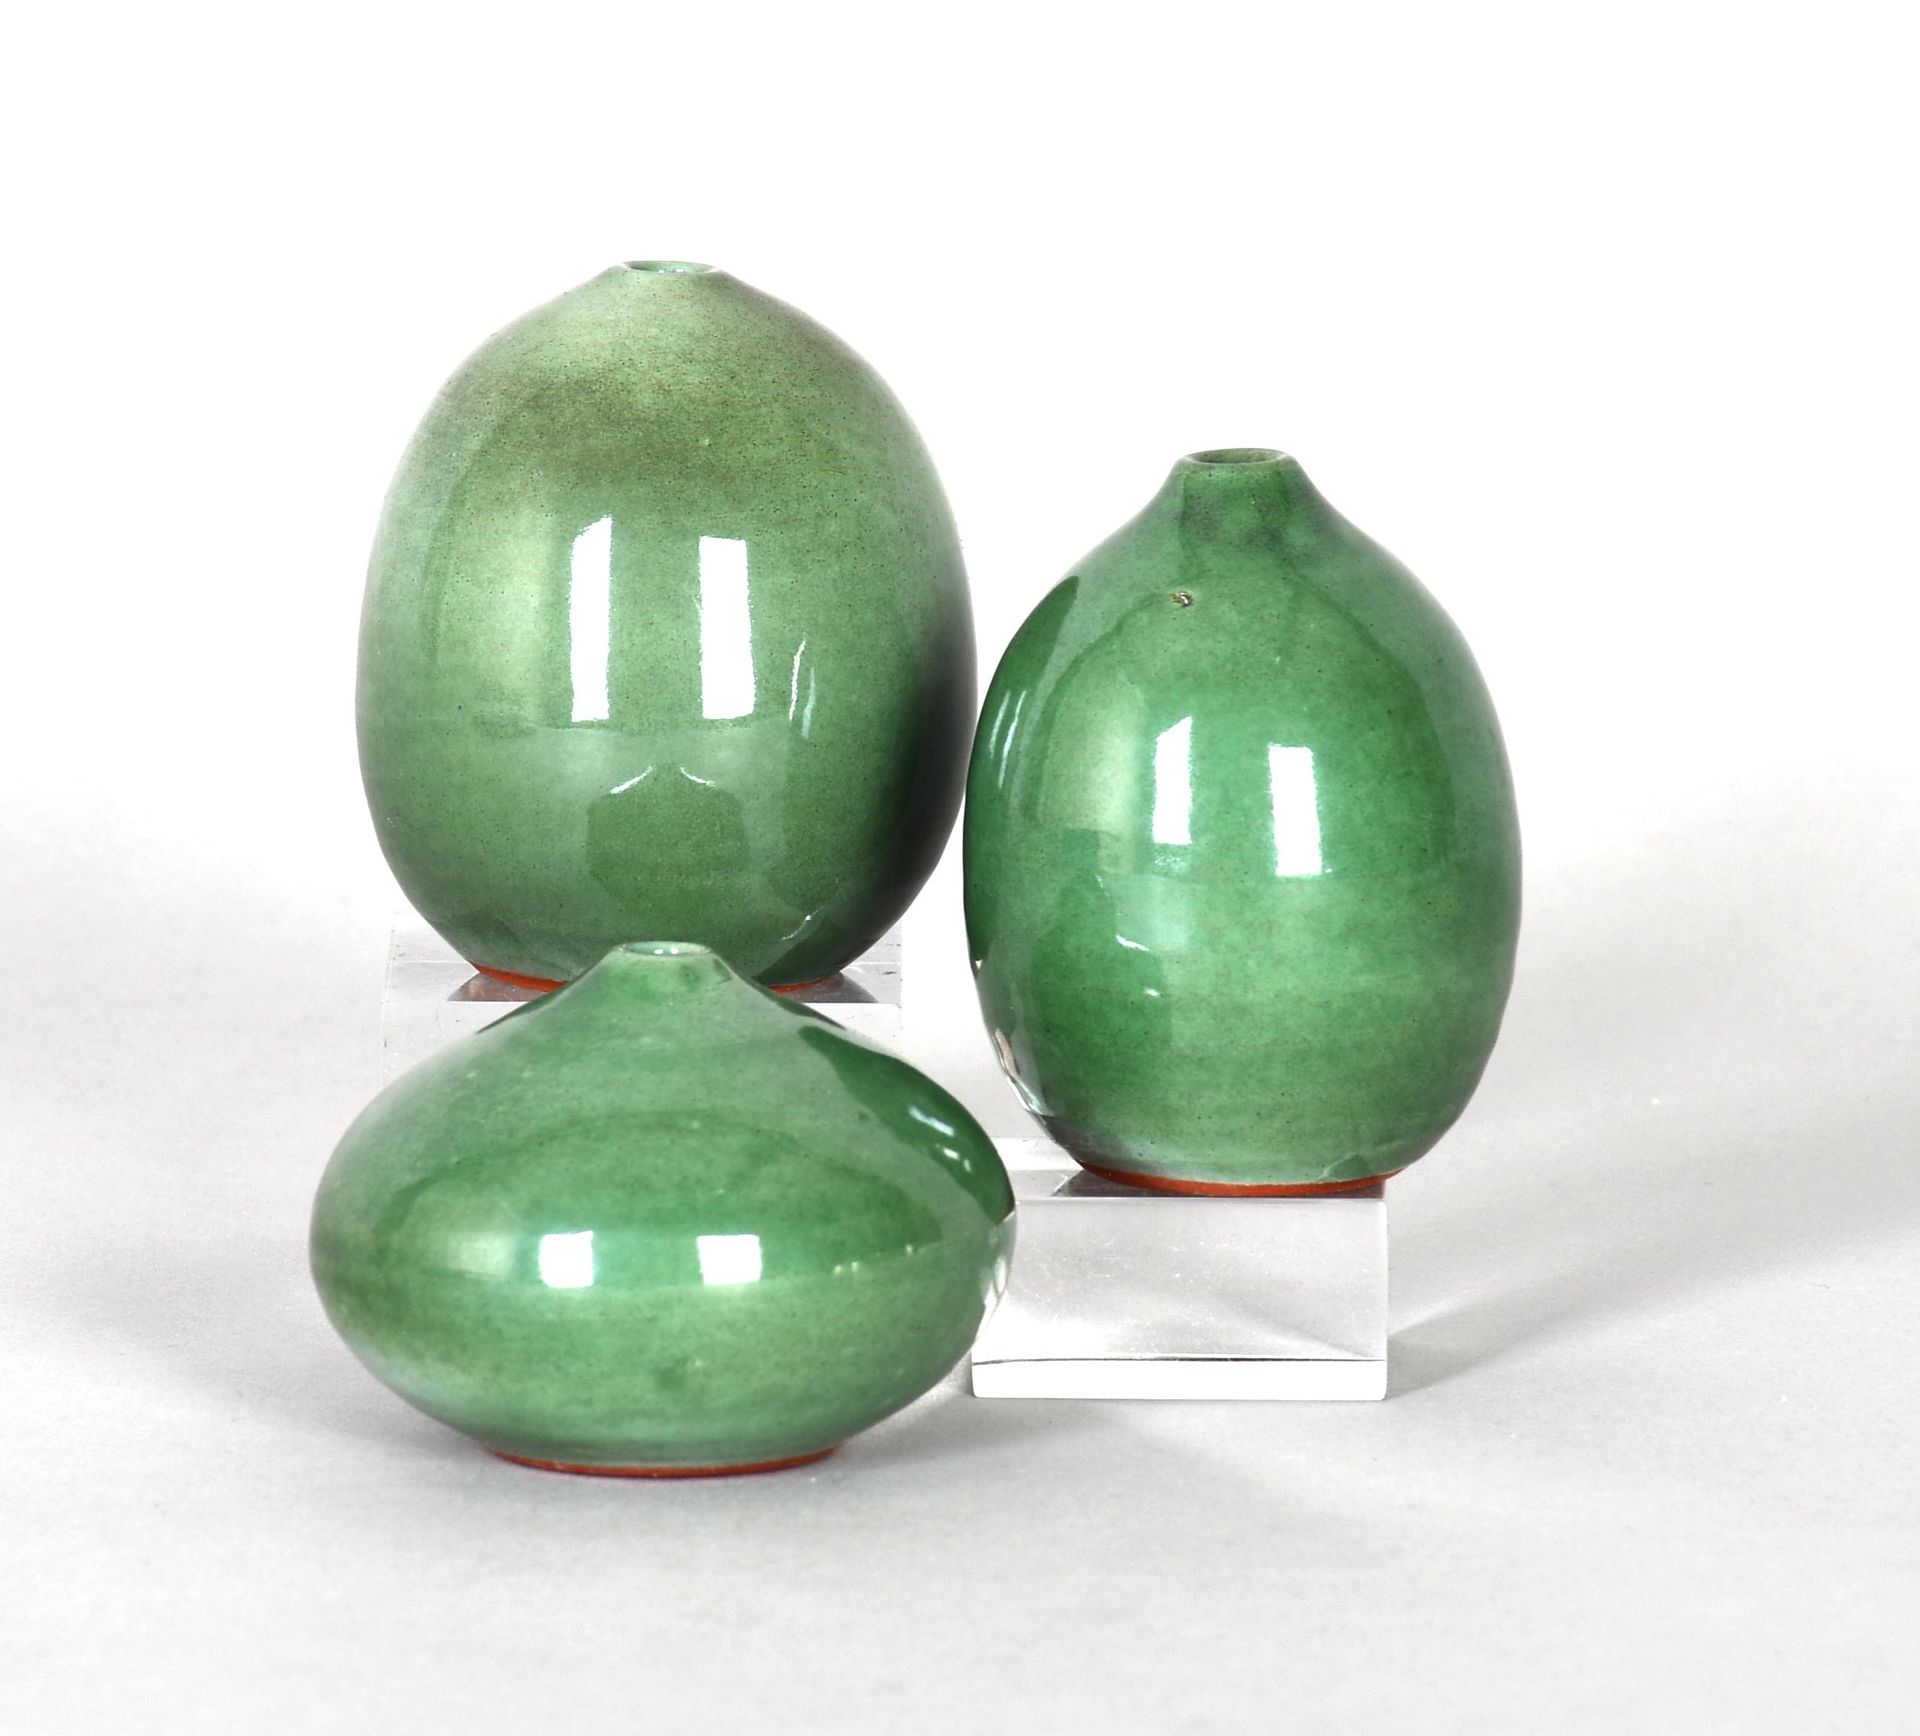 Null Antonio Lampecco

一系列三个微型绿色釉面陶土球花瓶。有图案的。